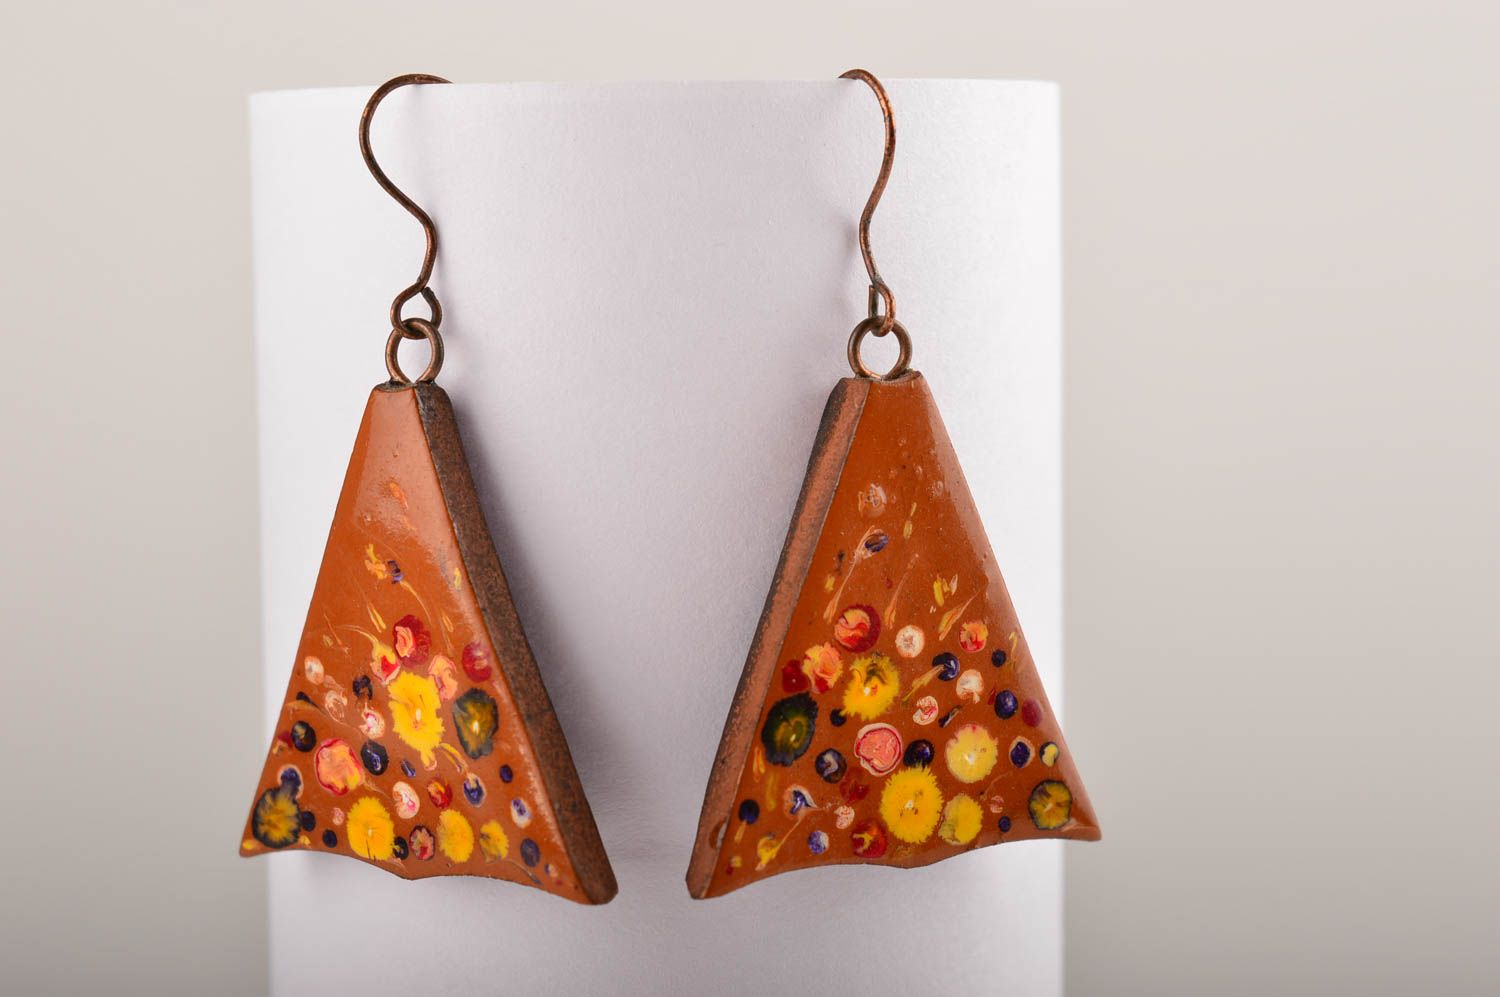 Handmade beautiful earrings stylish earrings with charms polymer clay jewelry photo 1